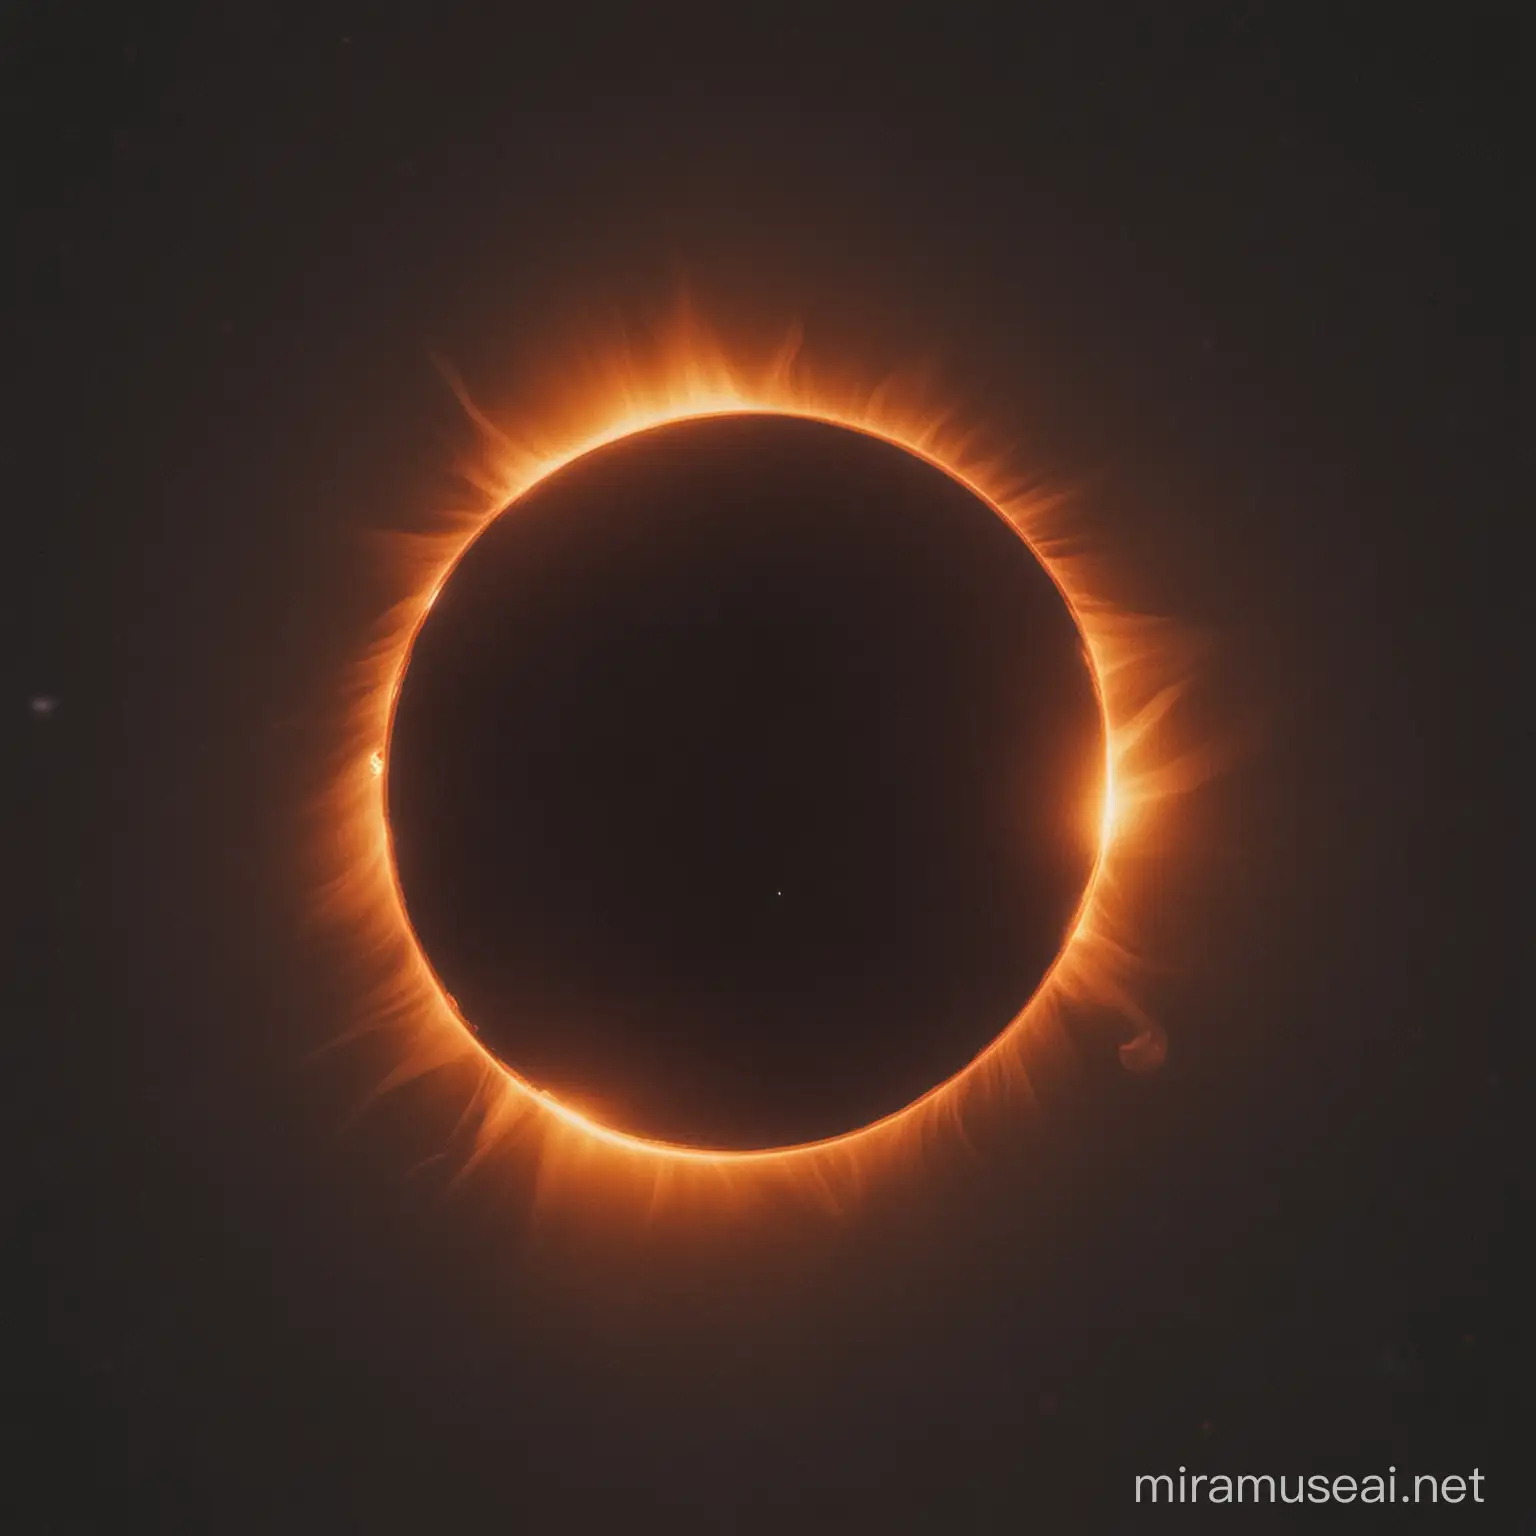 Breathtaking Solar Eclipse 2024 Celestial Event Captured in Stunning Detail